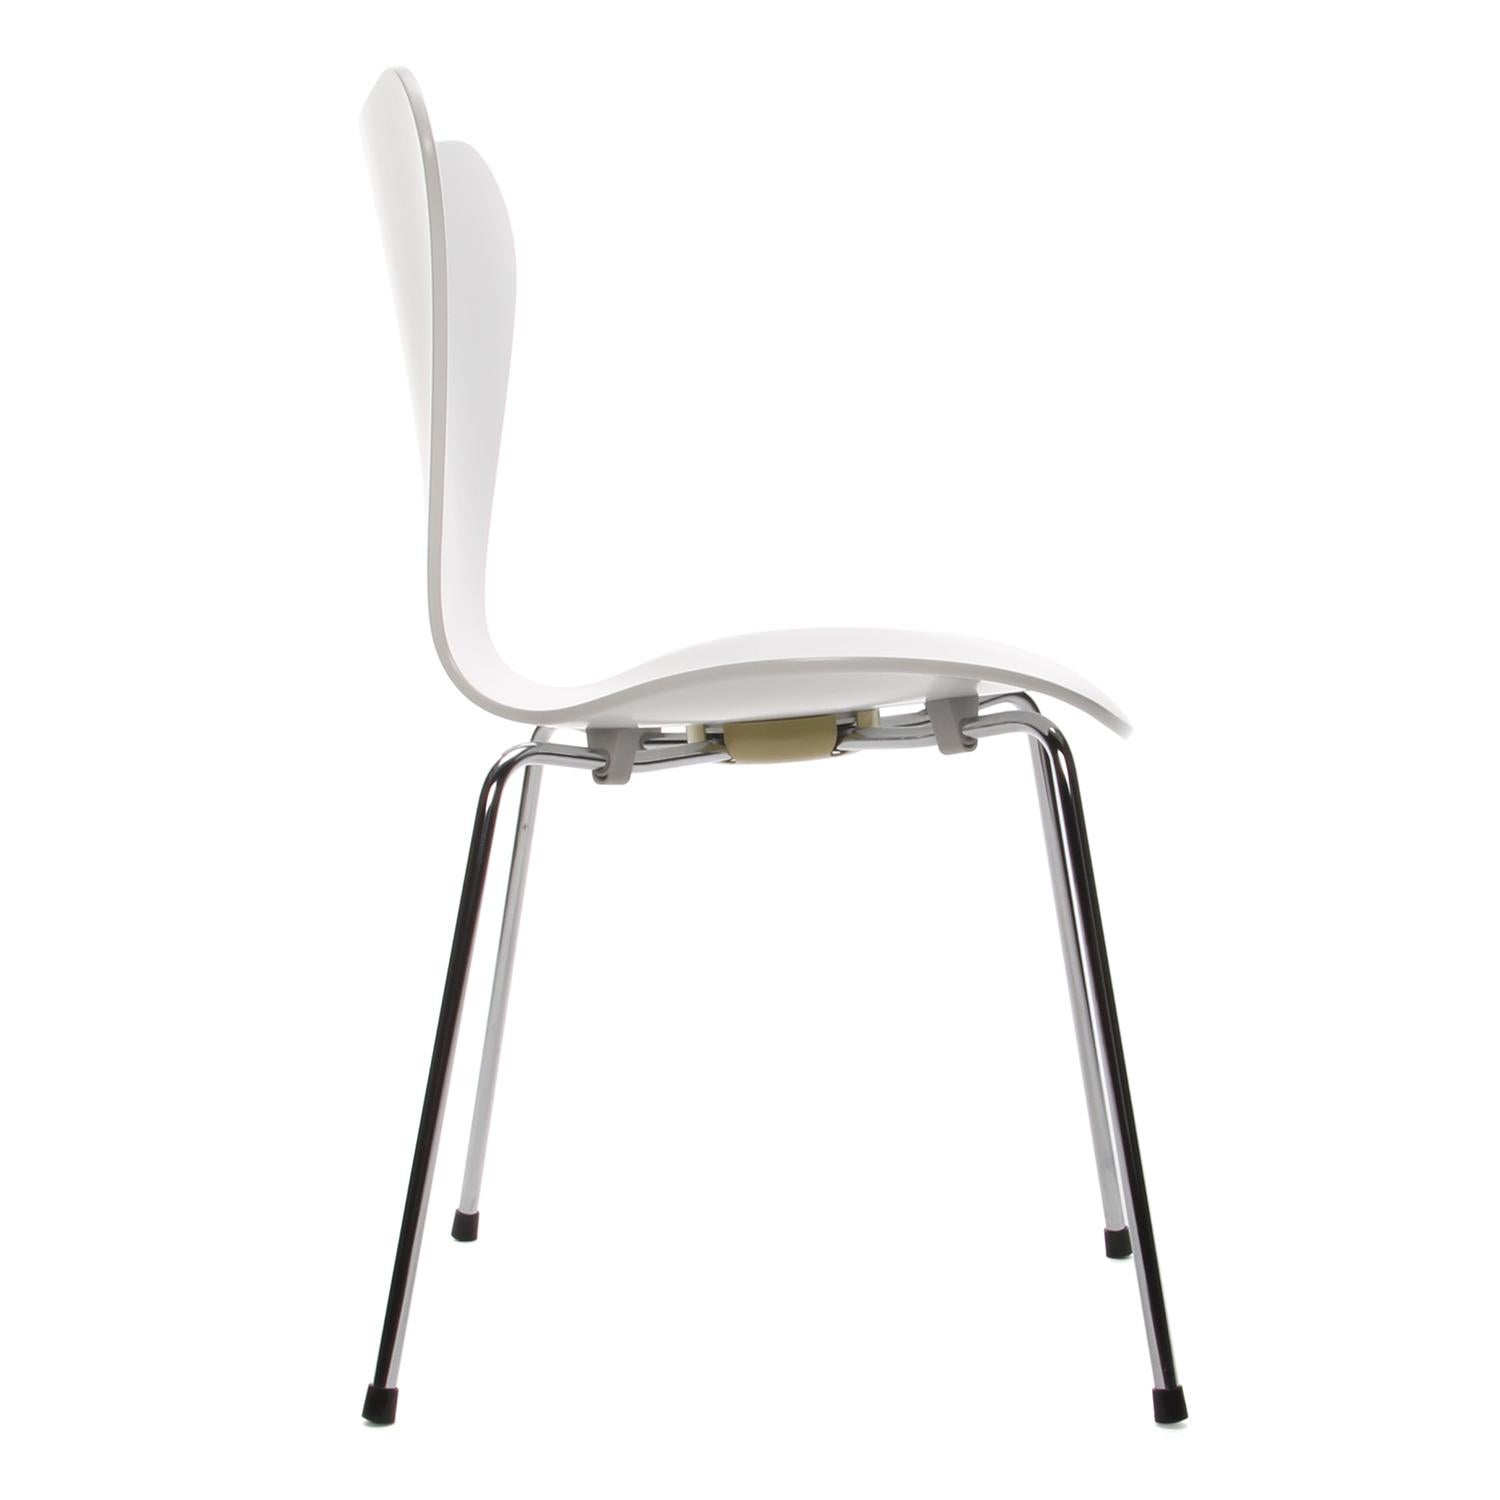 Scandinavian Modern Series 7 White Chair by Arne Jacobsen for Fritz Hansen in 1955